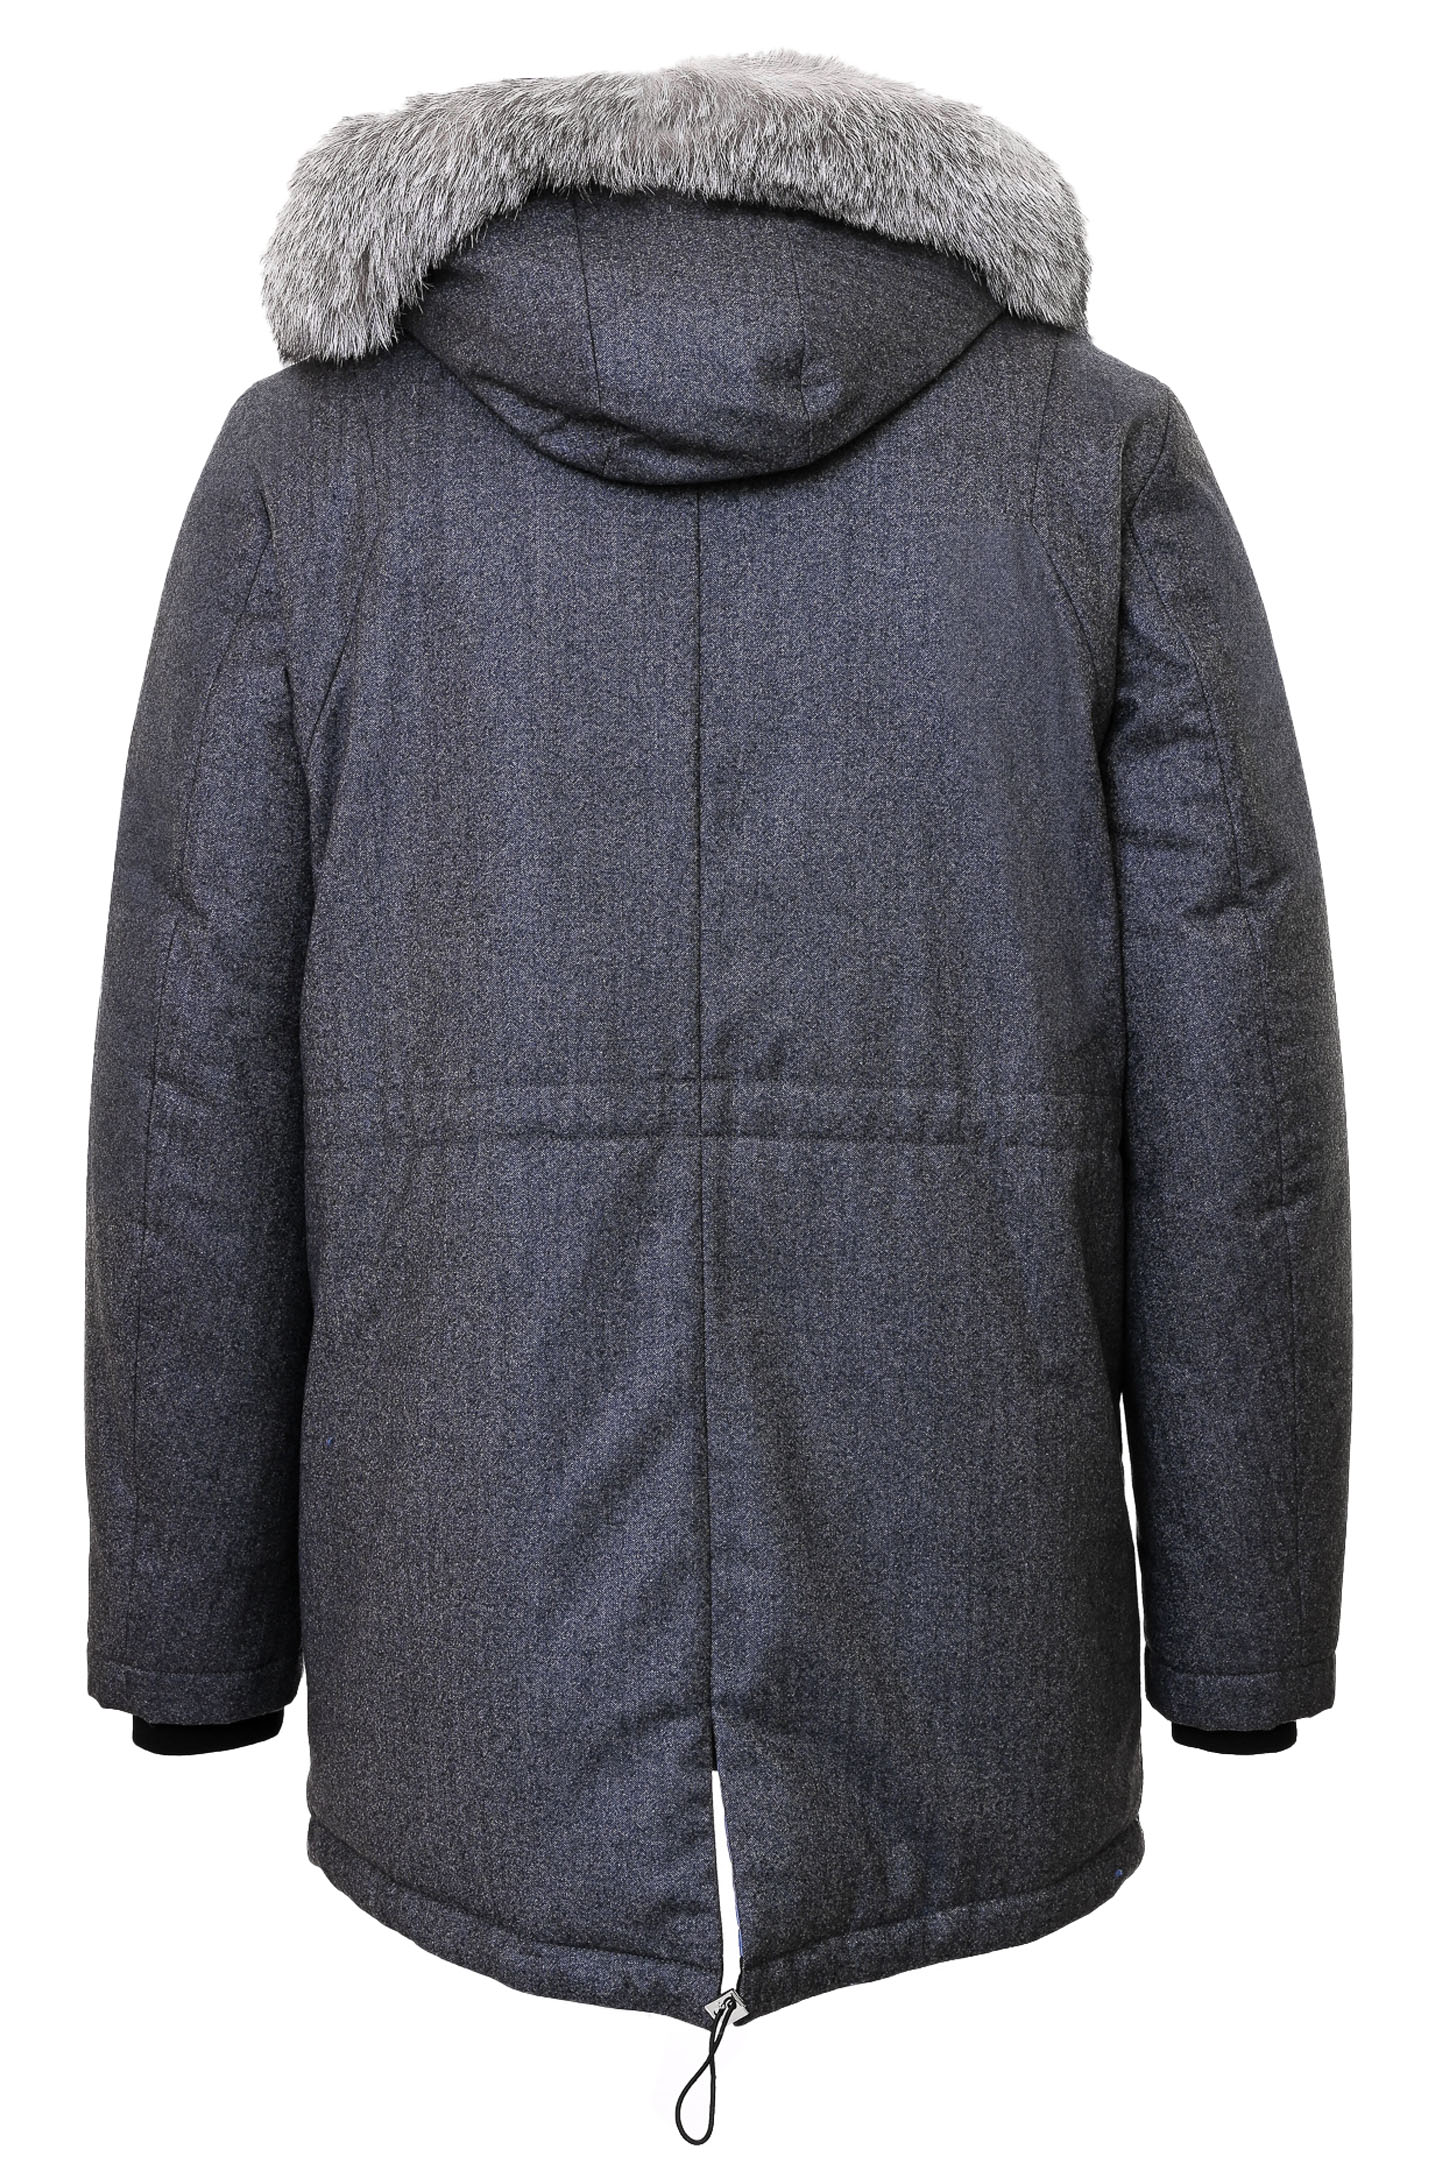 Куртка STEFANO RICCI MDJ1400070 WC001I, цвет: Серый, Мужской